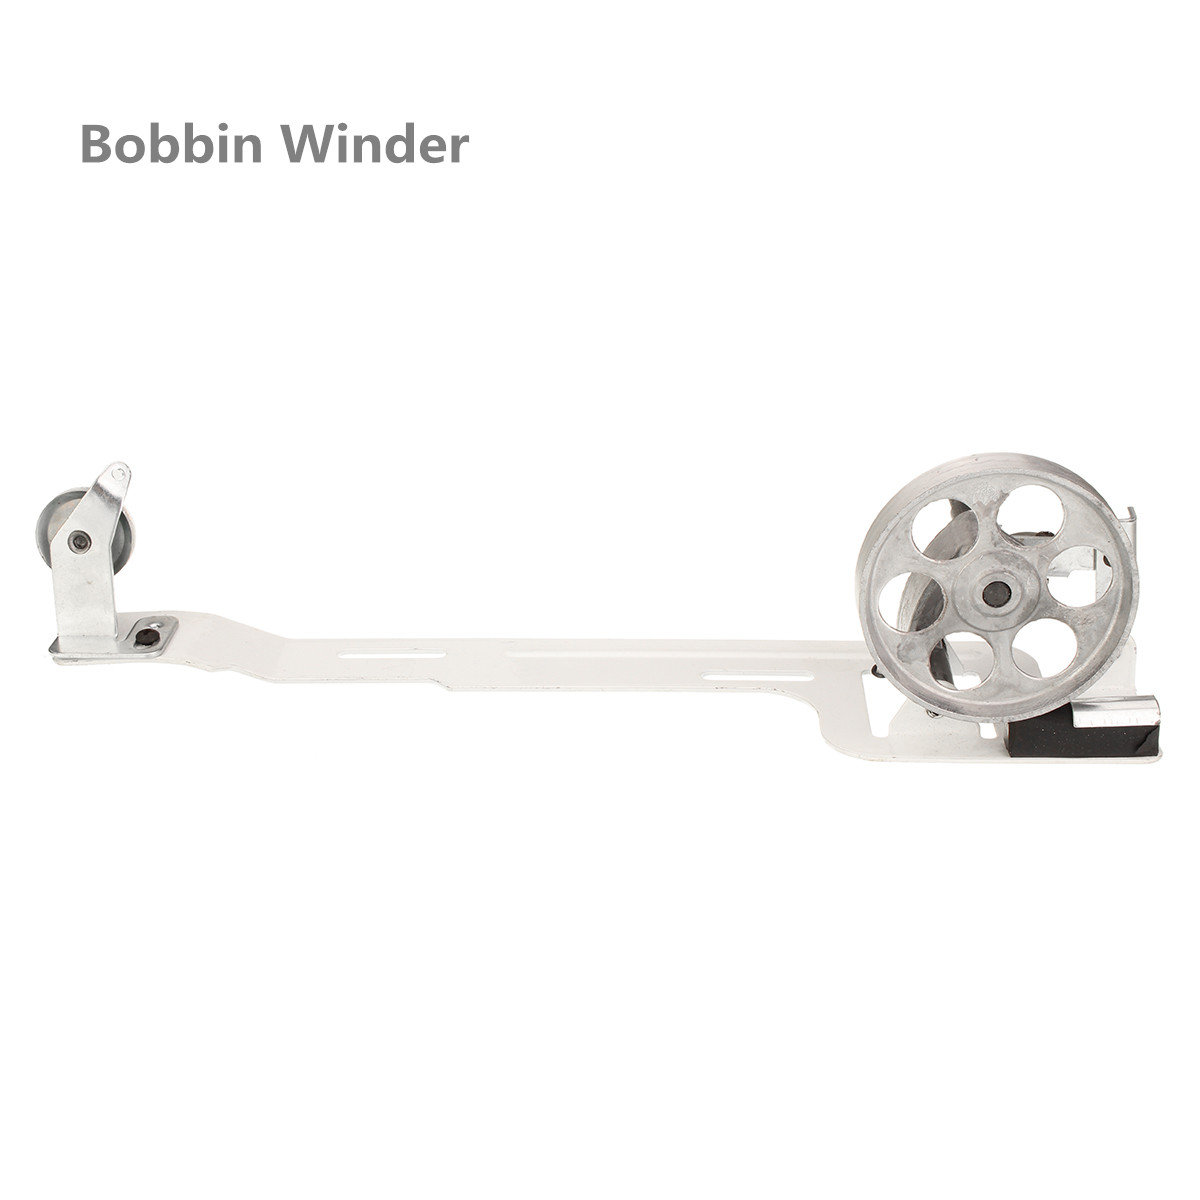 

Small 2.5" Bobbin Winder For Industrial Sewing Machines Juki Consew Singer Etc Single Needle Machine